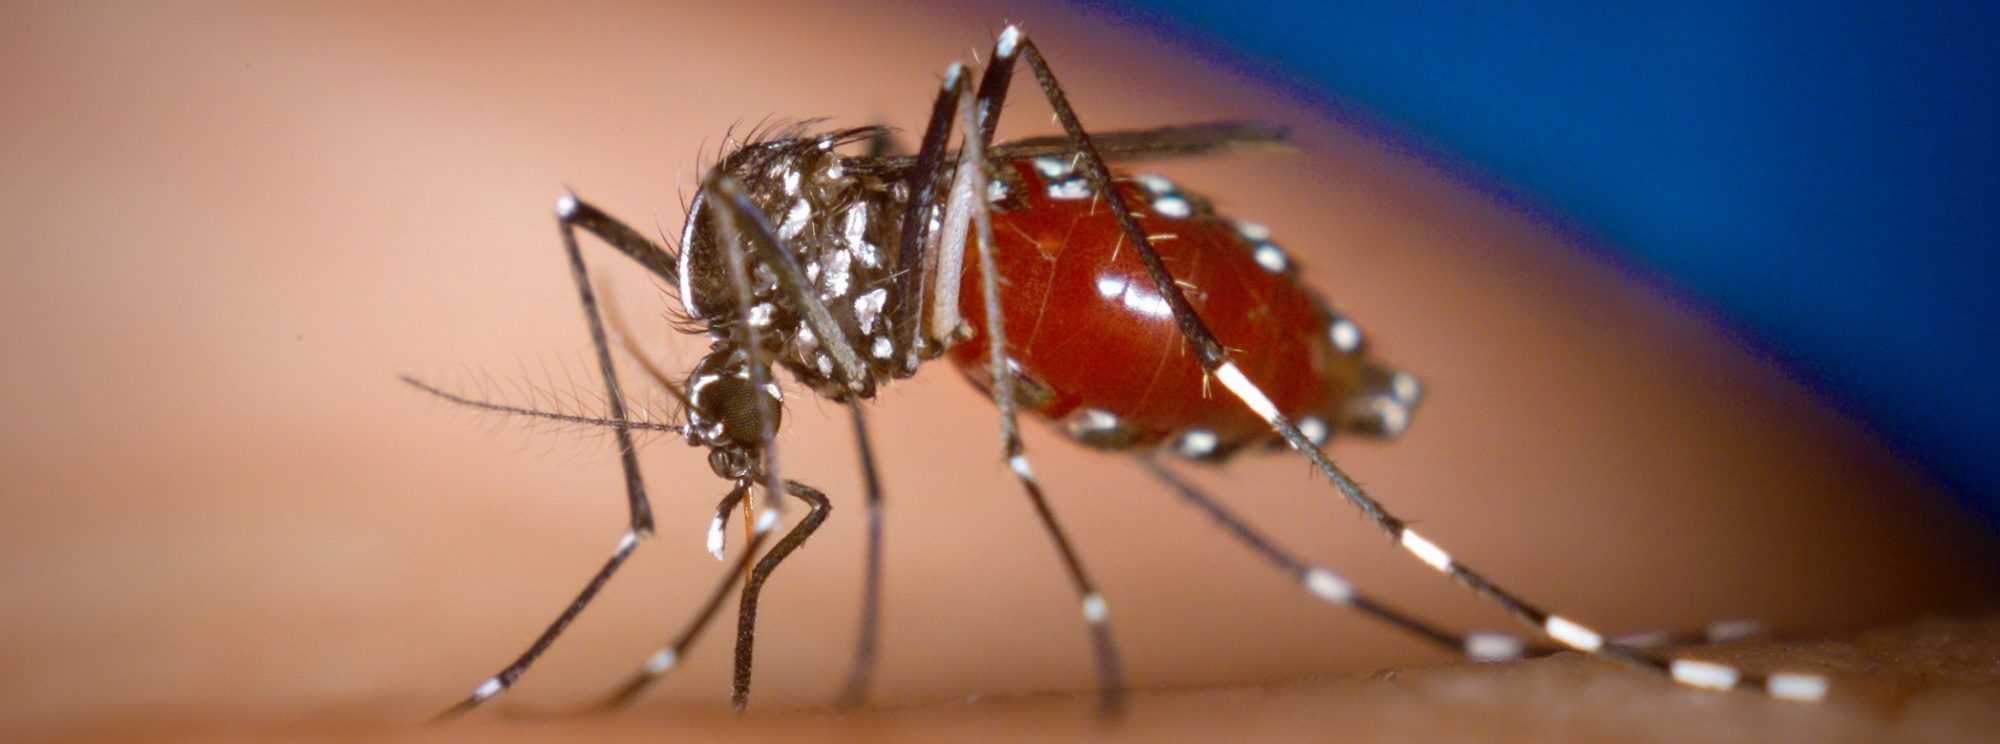 Femella de mosquit tigre (Aedes albopictus) succionant sang d'una persona. Foto: James Gathany, CDC